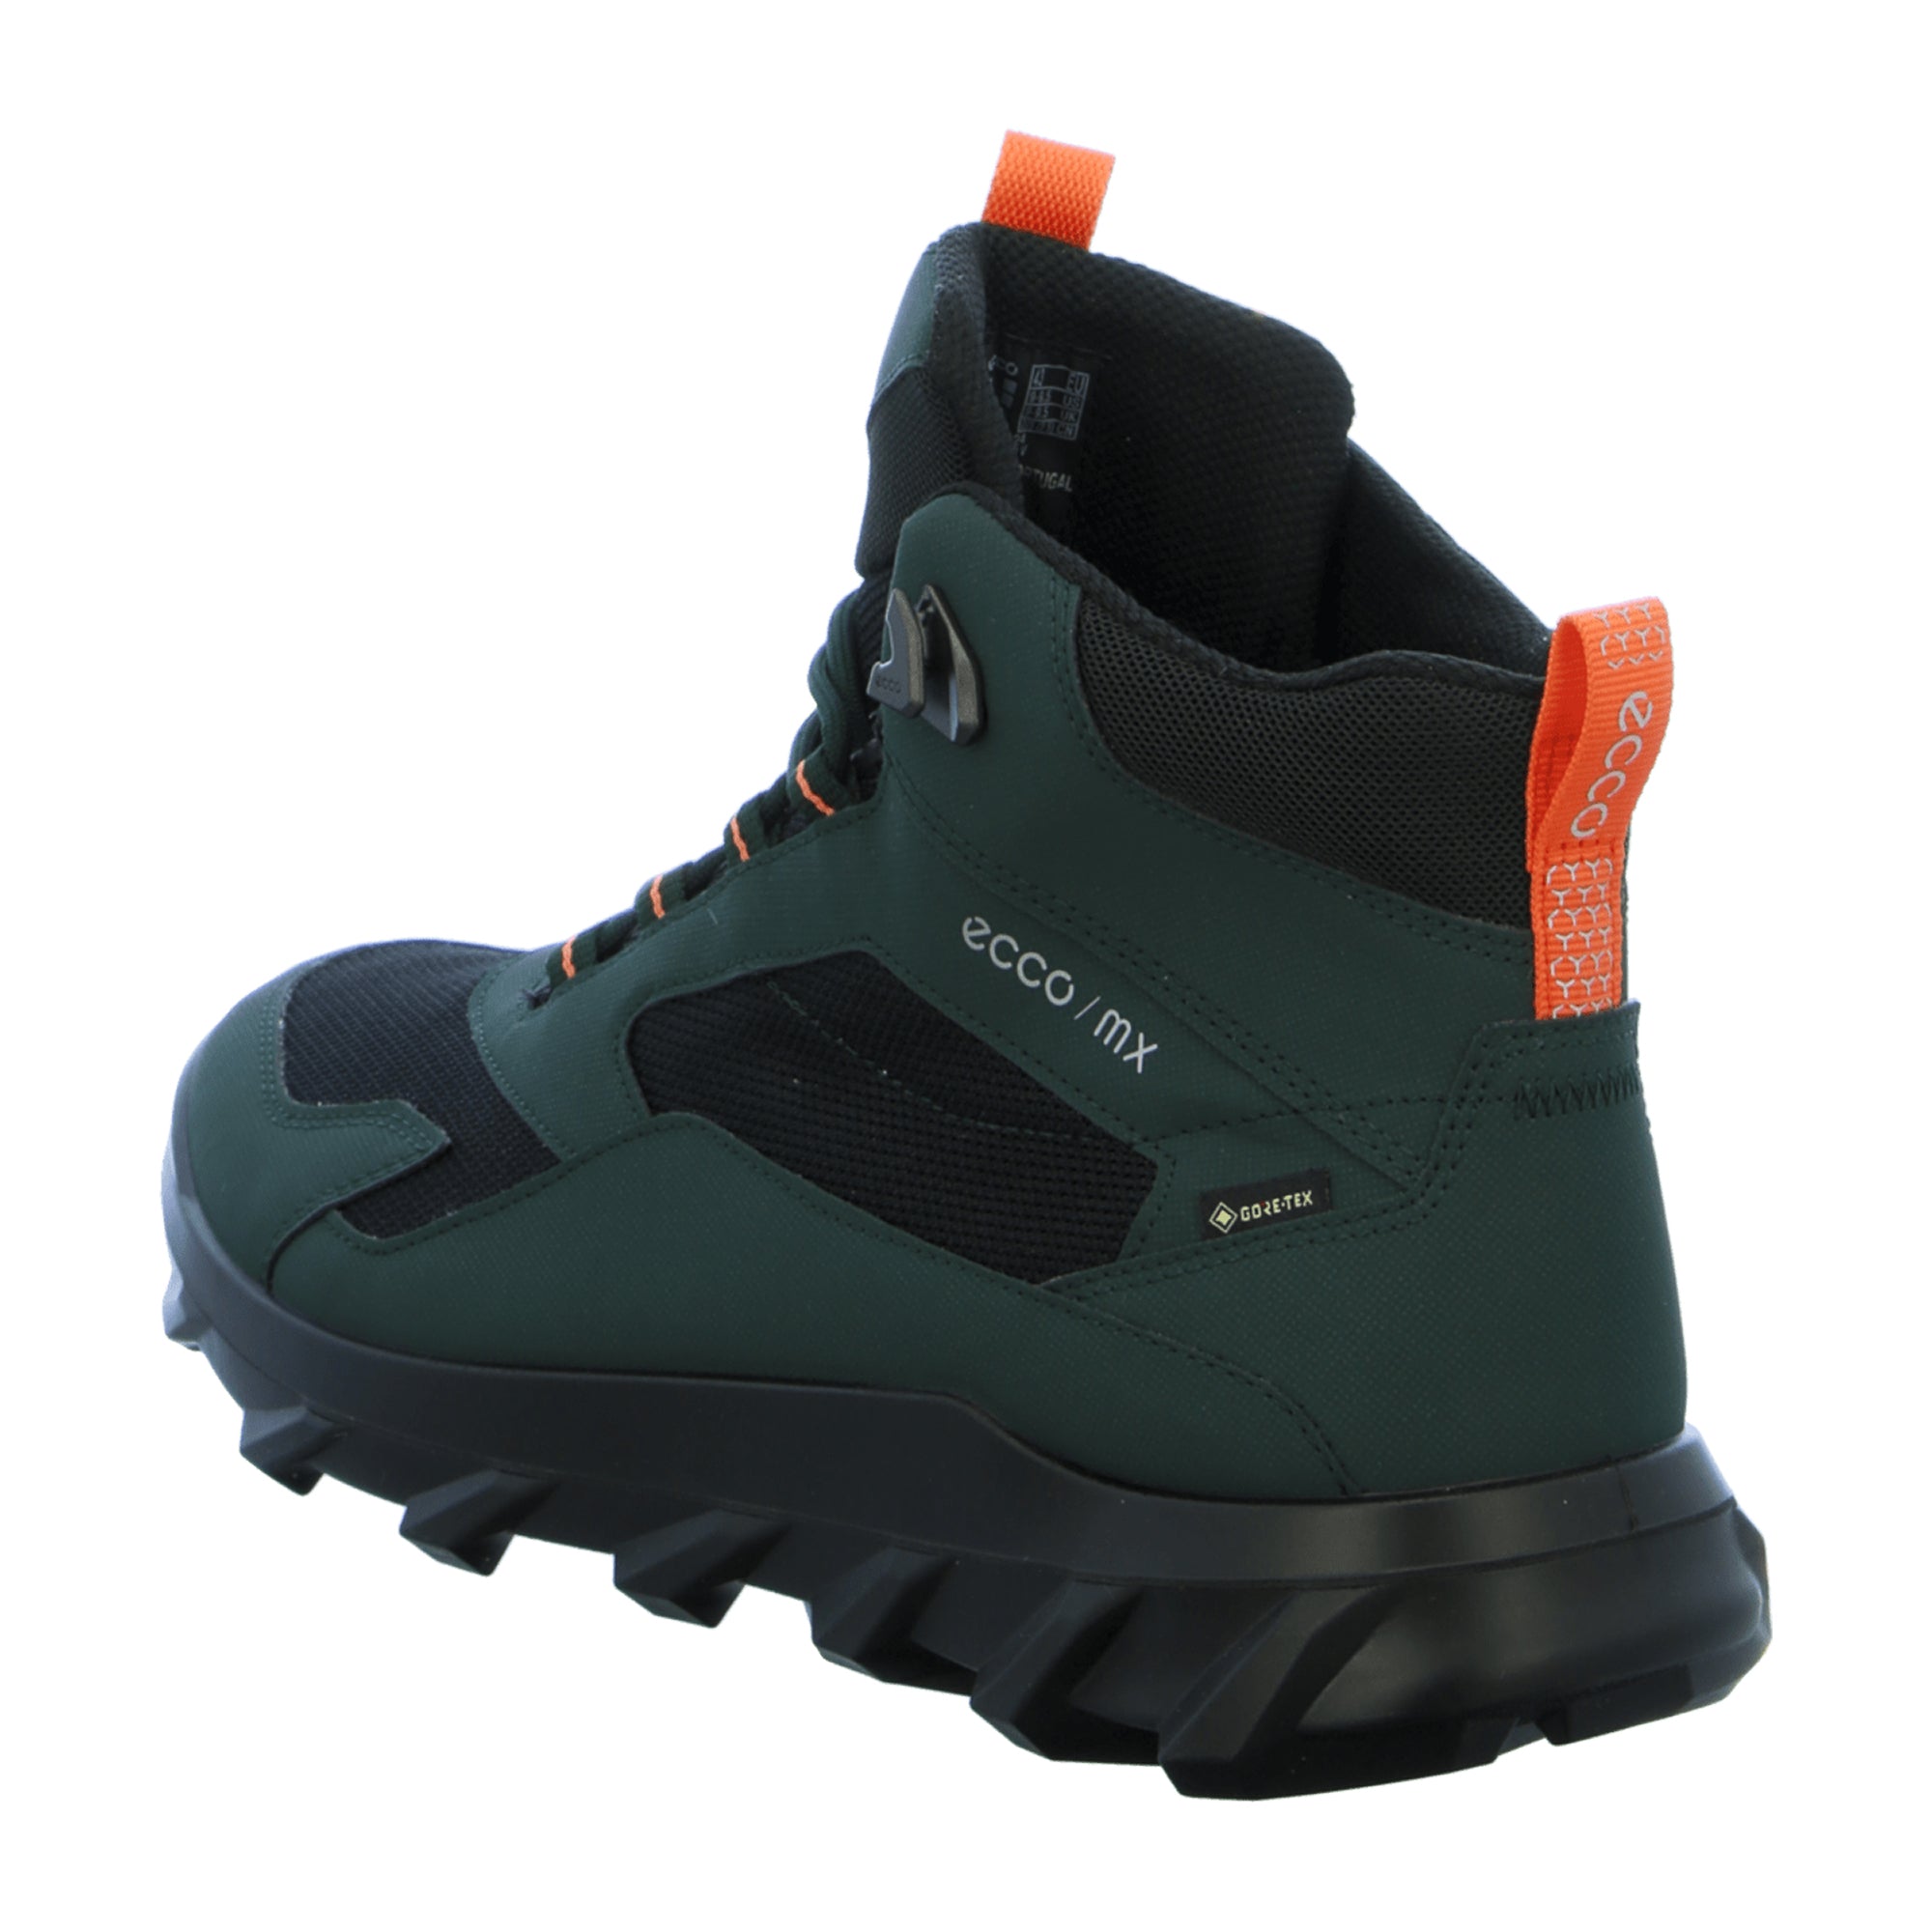 Ecco MX Men's Gore-Tex Boots - Waterproof, Durable Fashion in Black